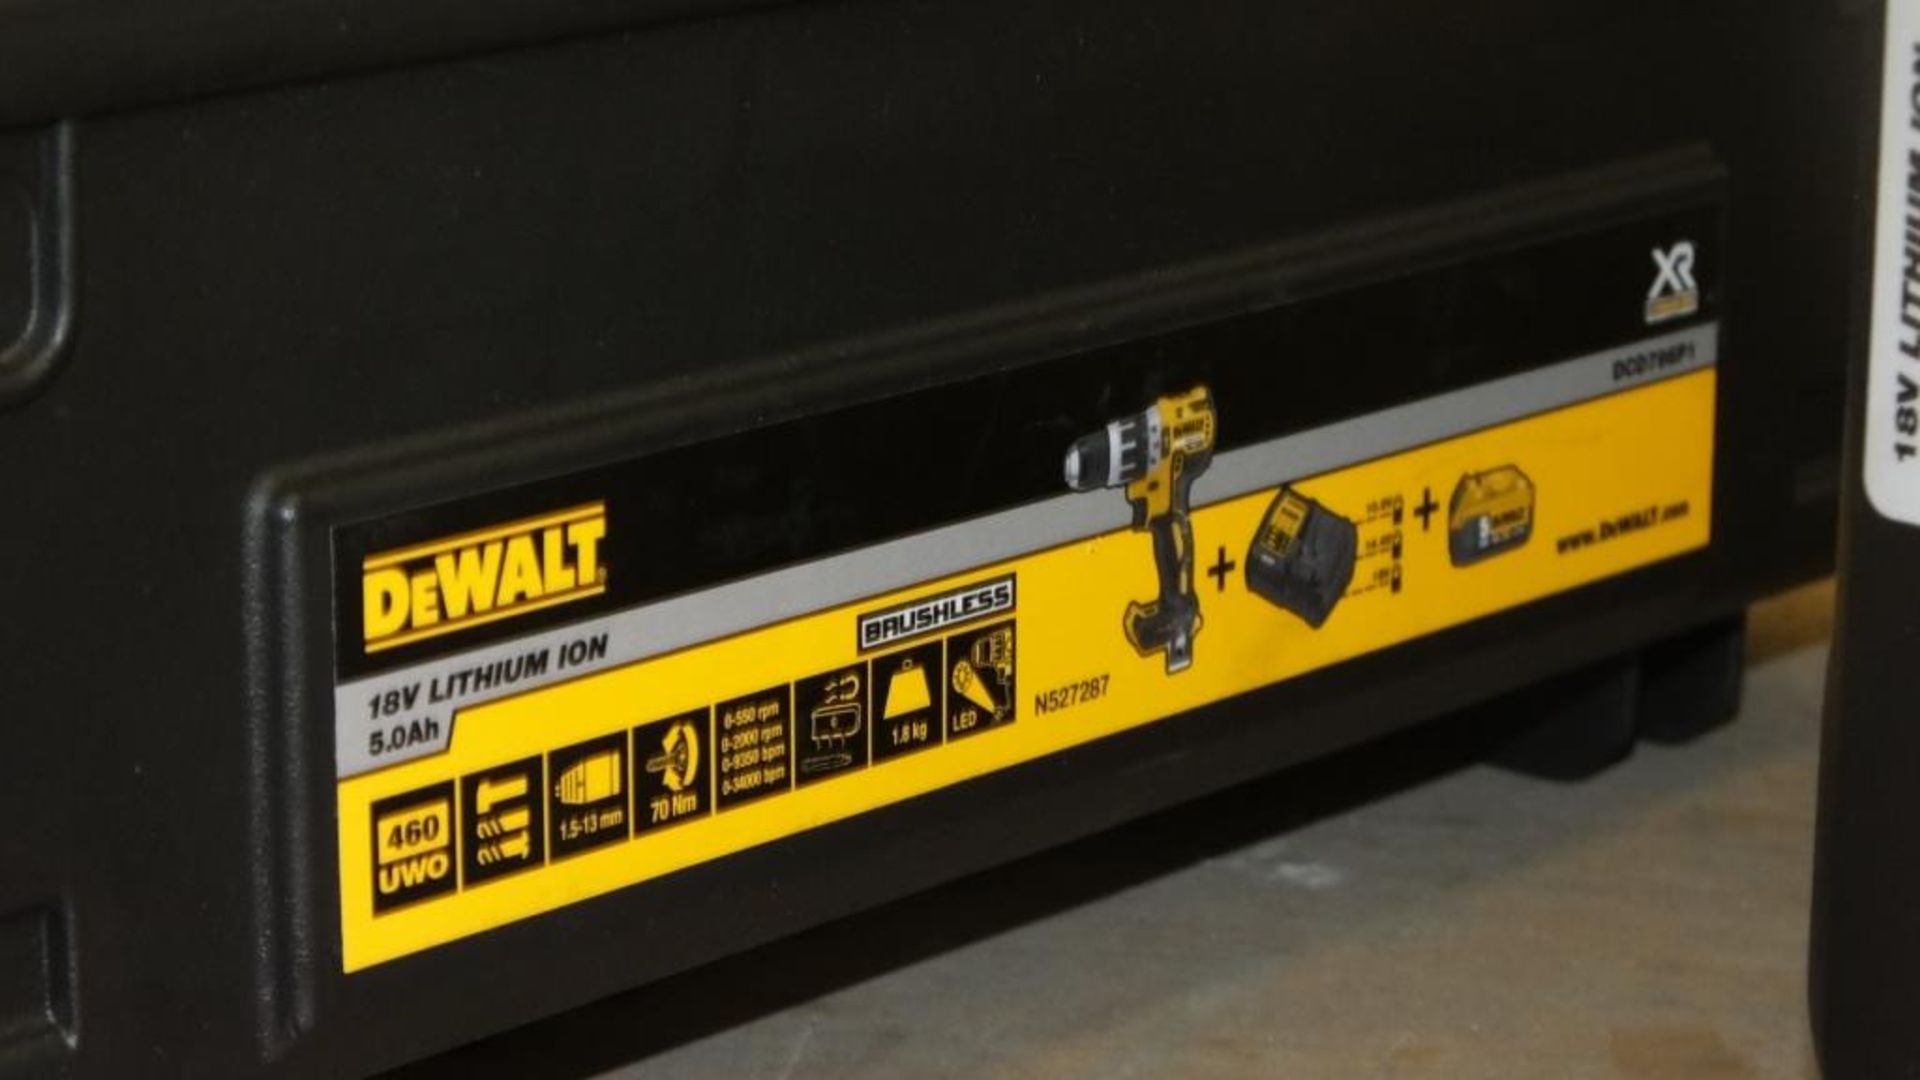 3x Dewalt power tool cases - empty - Image 3 of 4